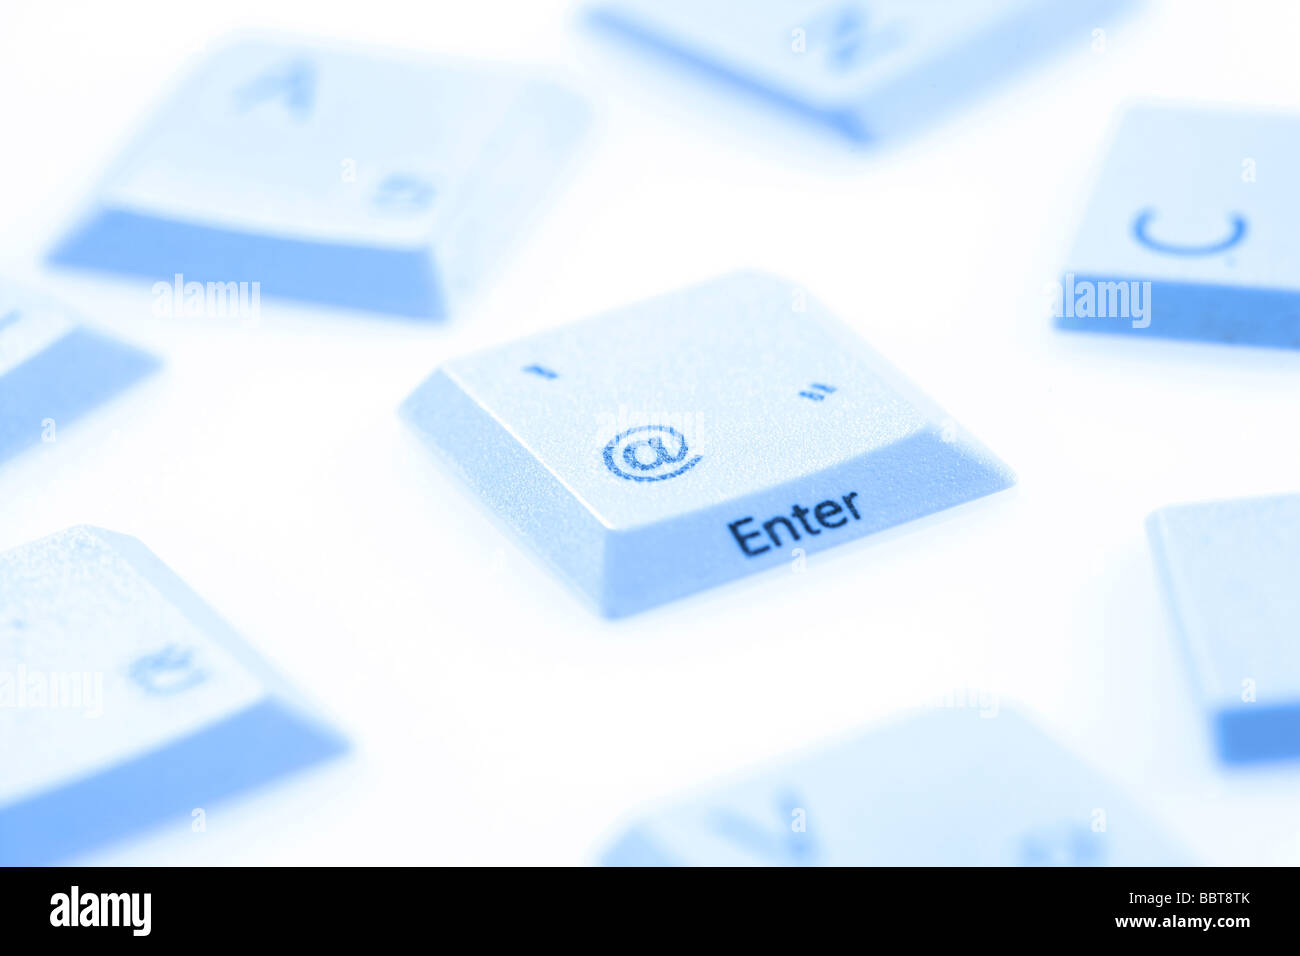 Computer keypads on white background Stock Photo